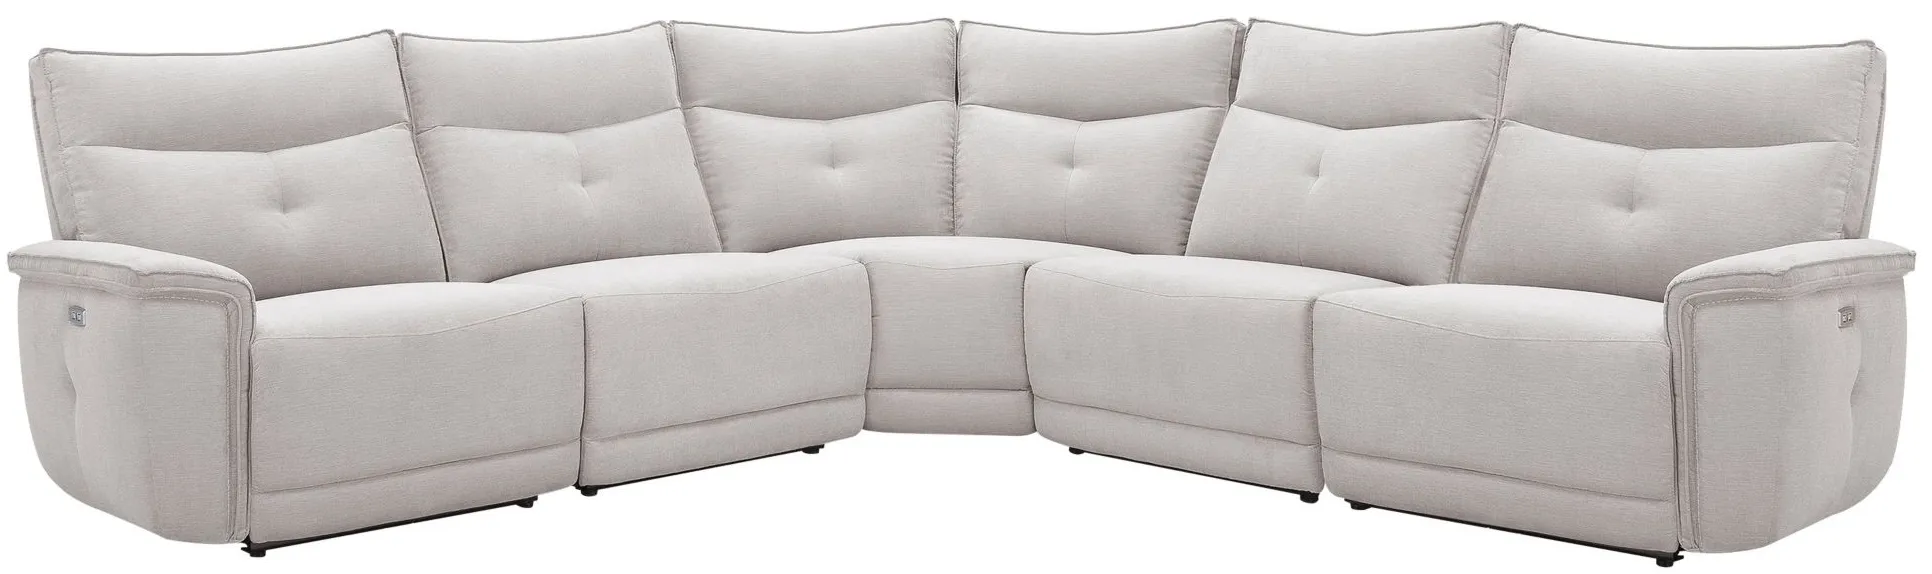 Graceland 5-pc. Sectional Sofa w/Power Headrest in Mist Gray by Bellanest